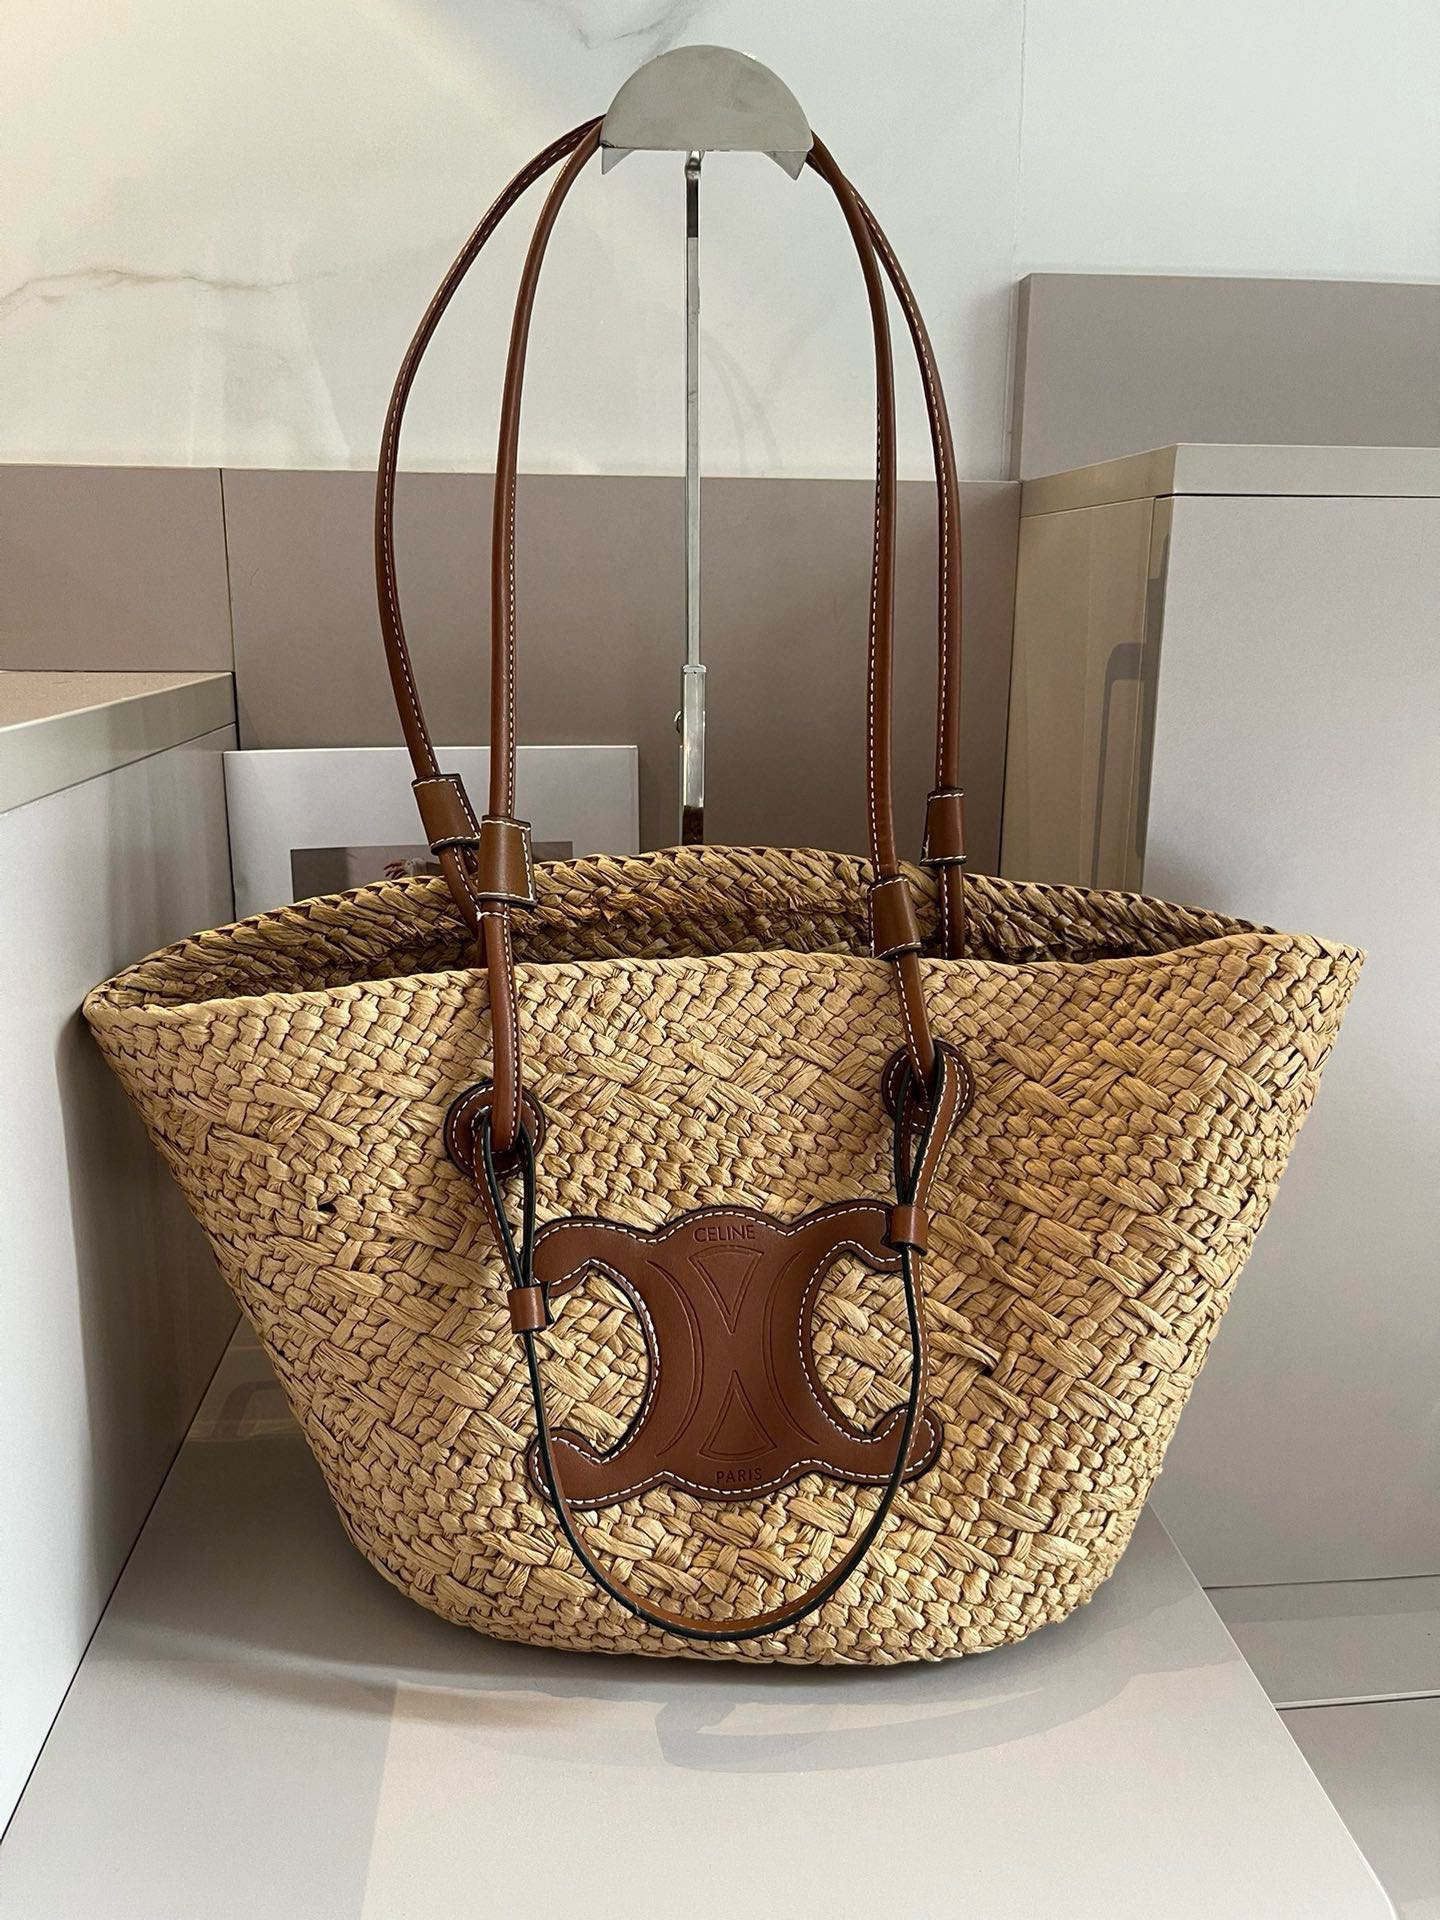 Replica Best
 Celine Bags Handbags Raffia Straw Woven Summer Collection Beach